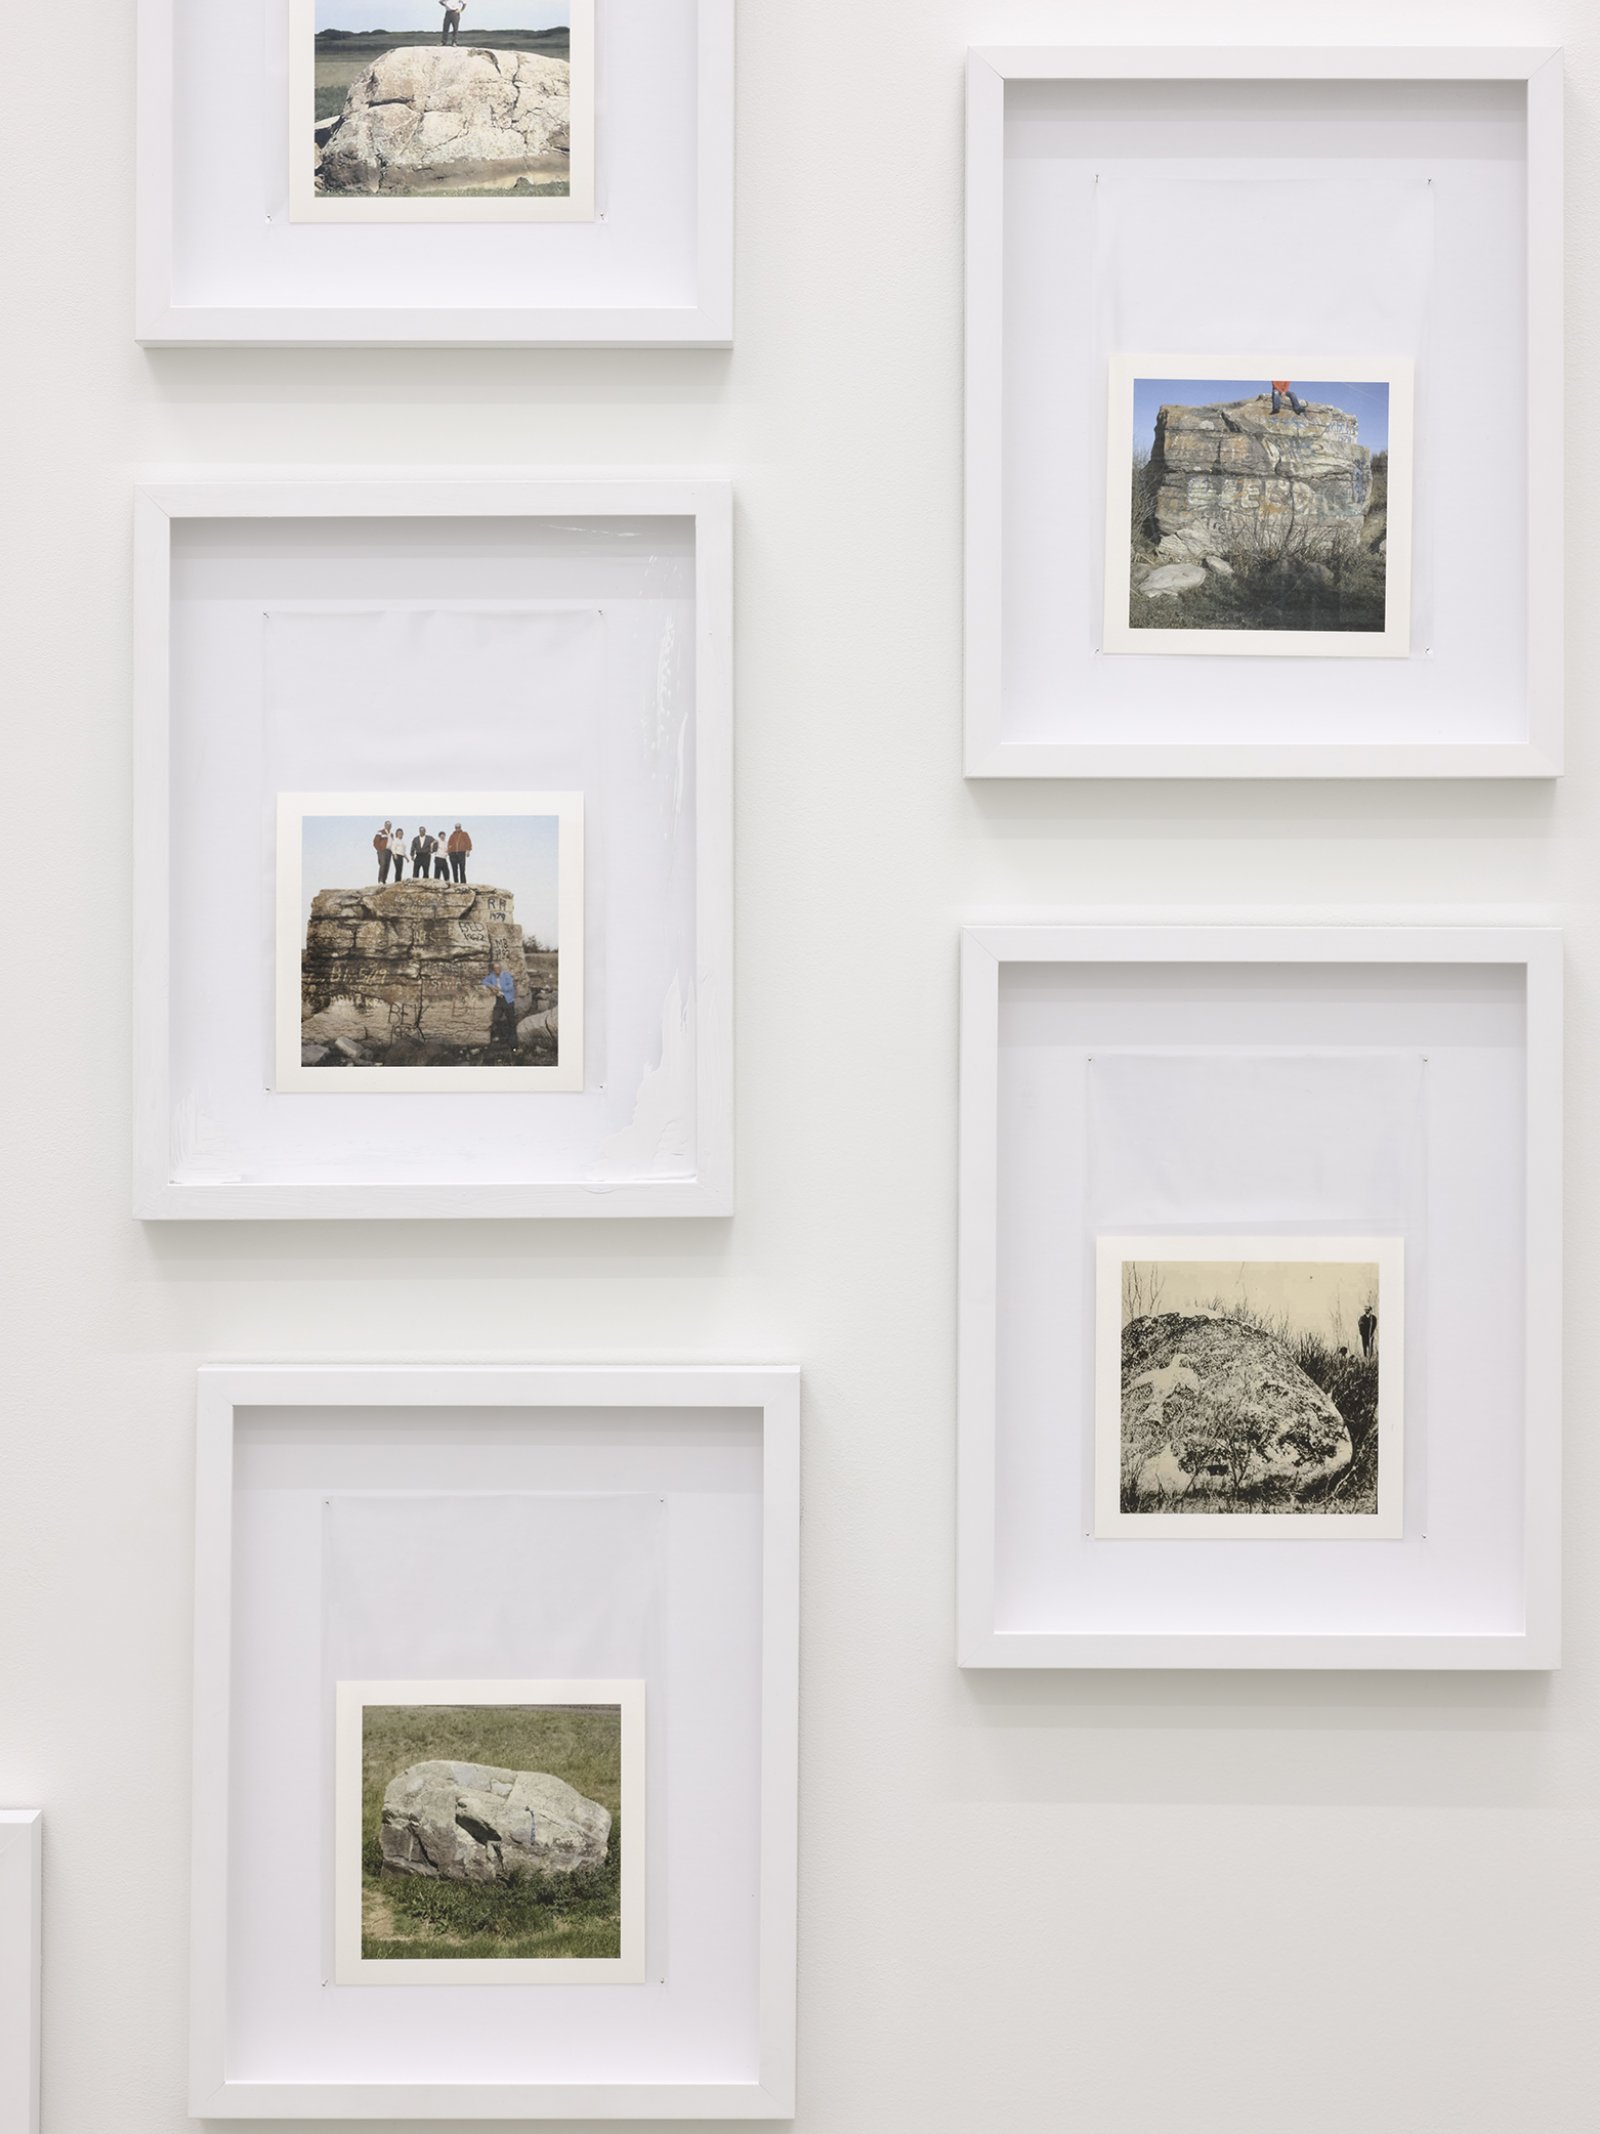 Duane Linklater, Erratics (detail), 2017, 13 framed digital prints, plastic bags, pins, 70 x 76 in. (178 x 193 cm)